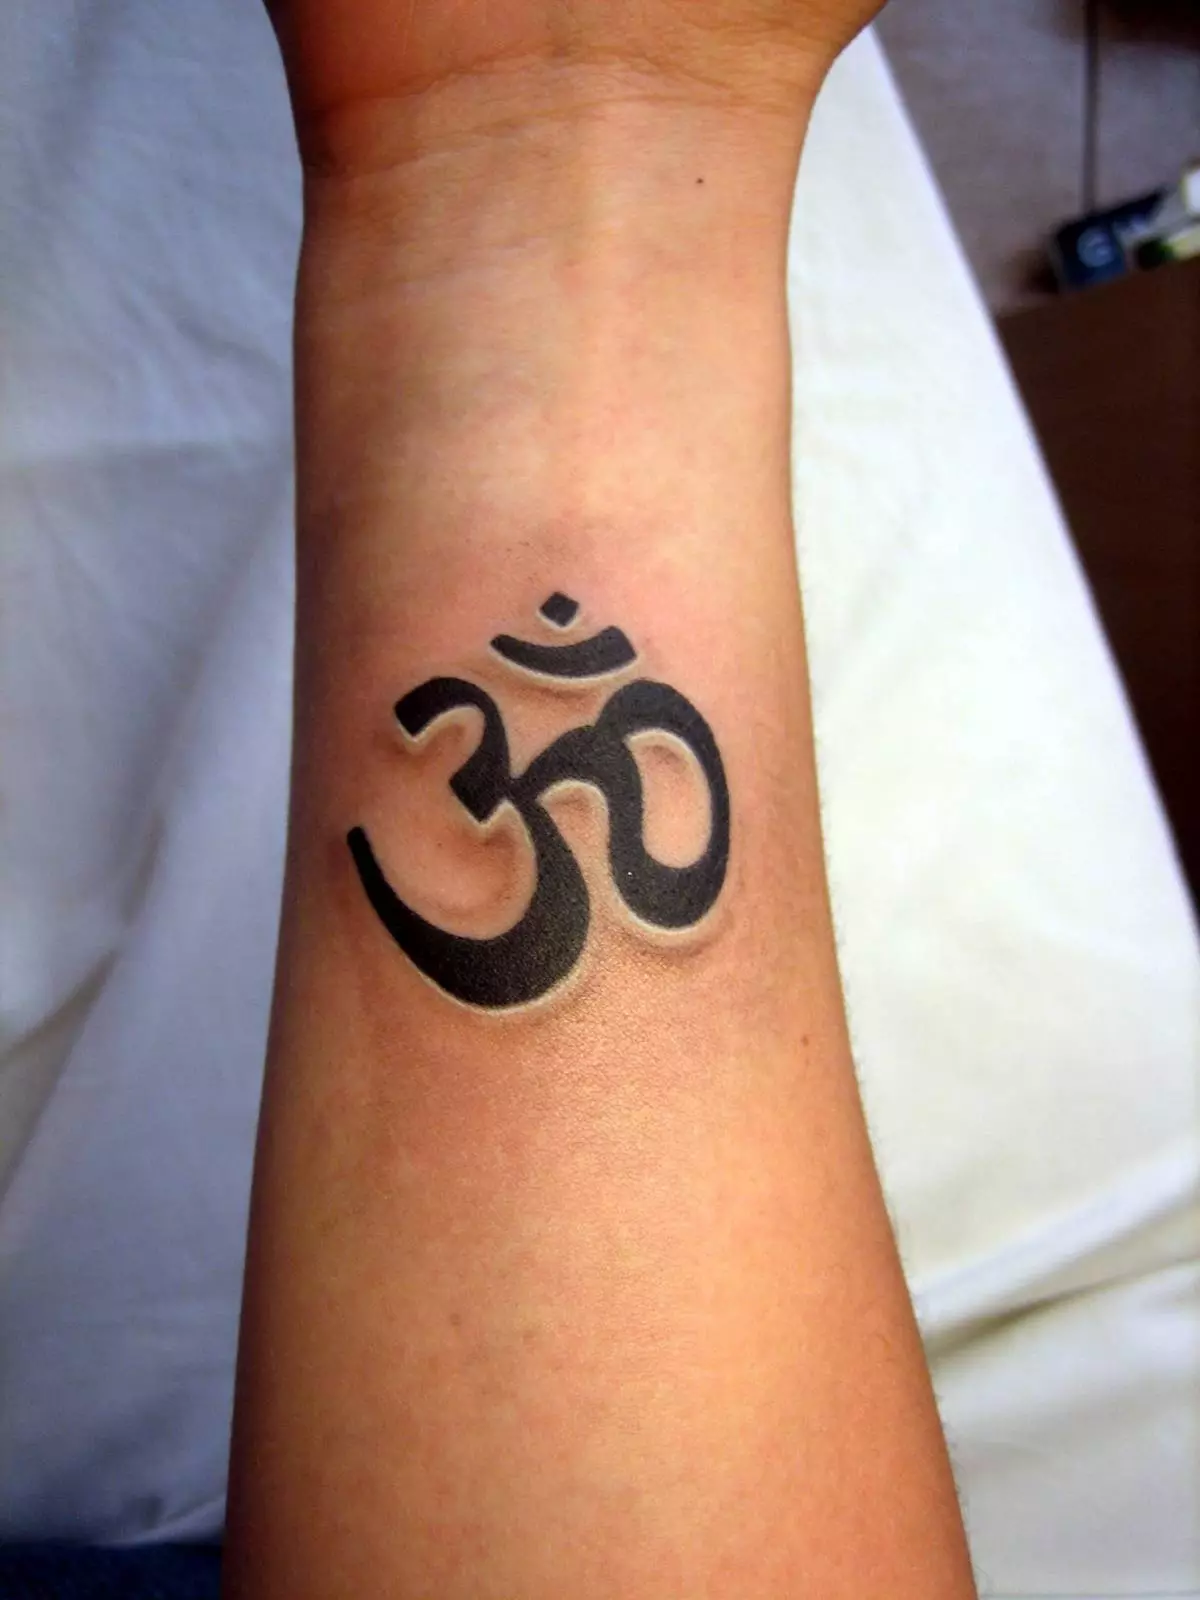 Om tattoo: agaciro ka tatouage muburyo bwikimenyetso cya mantra, tatouage ku ijosi no inyuma, ku rutugu hamwe n'ibindi bice by'umubiri, ibishushanyo 13932_20